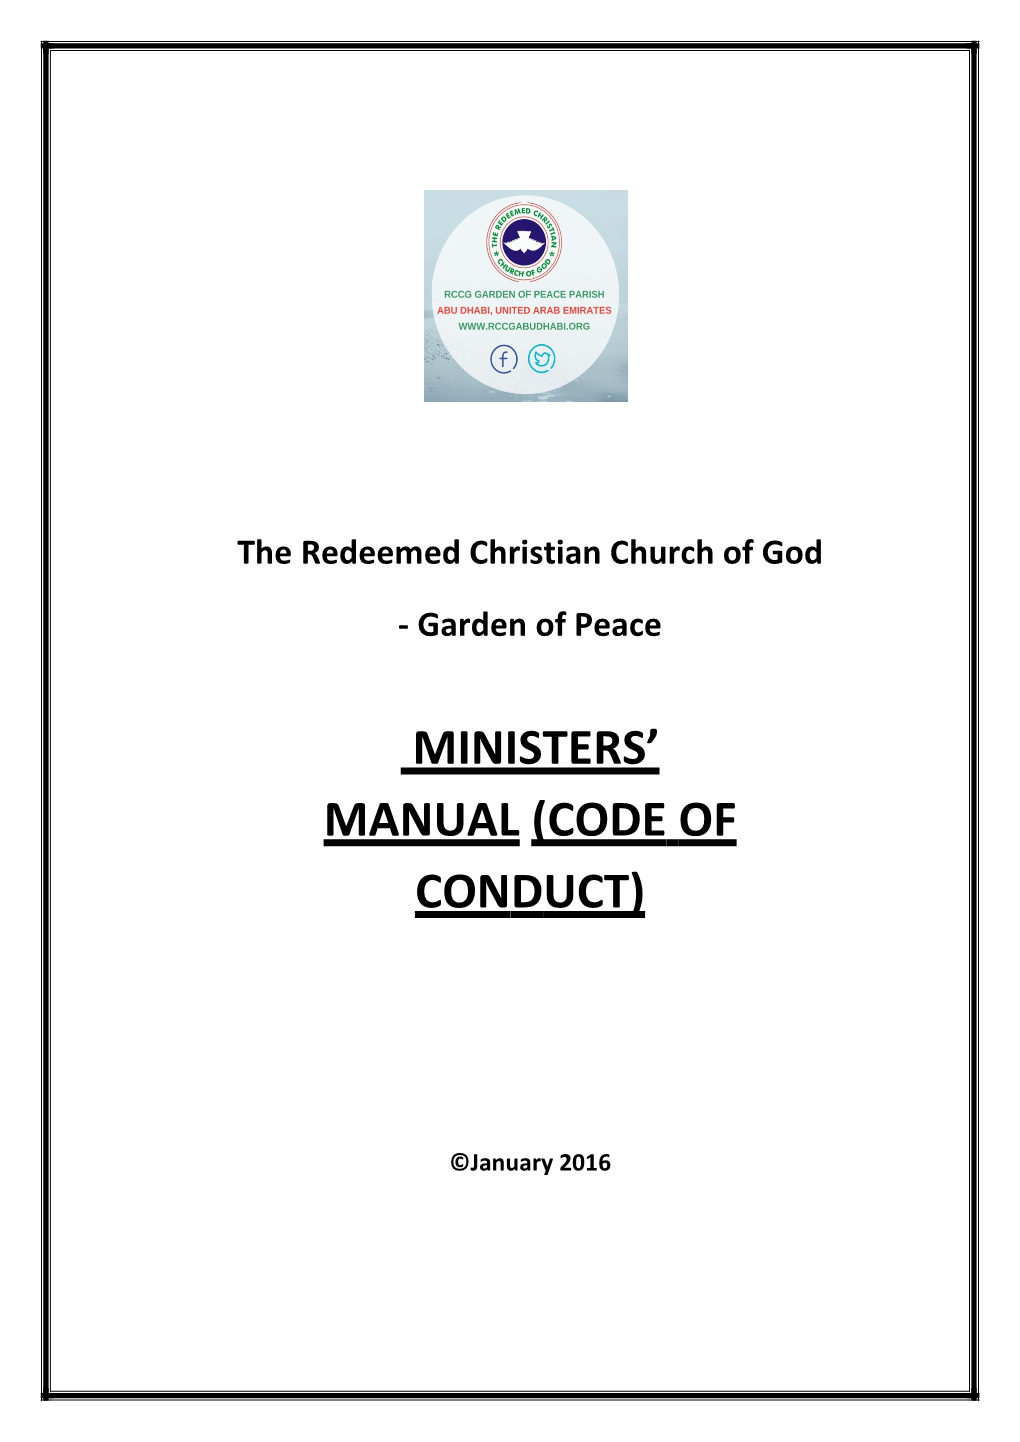 Theredeemed Christian Church of God